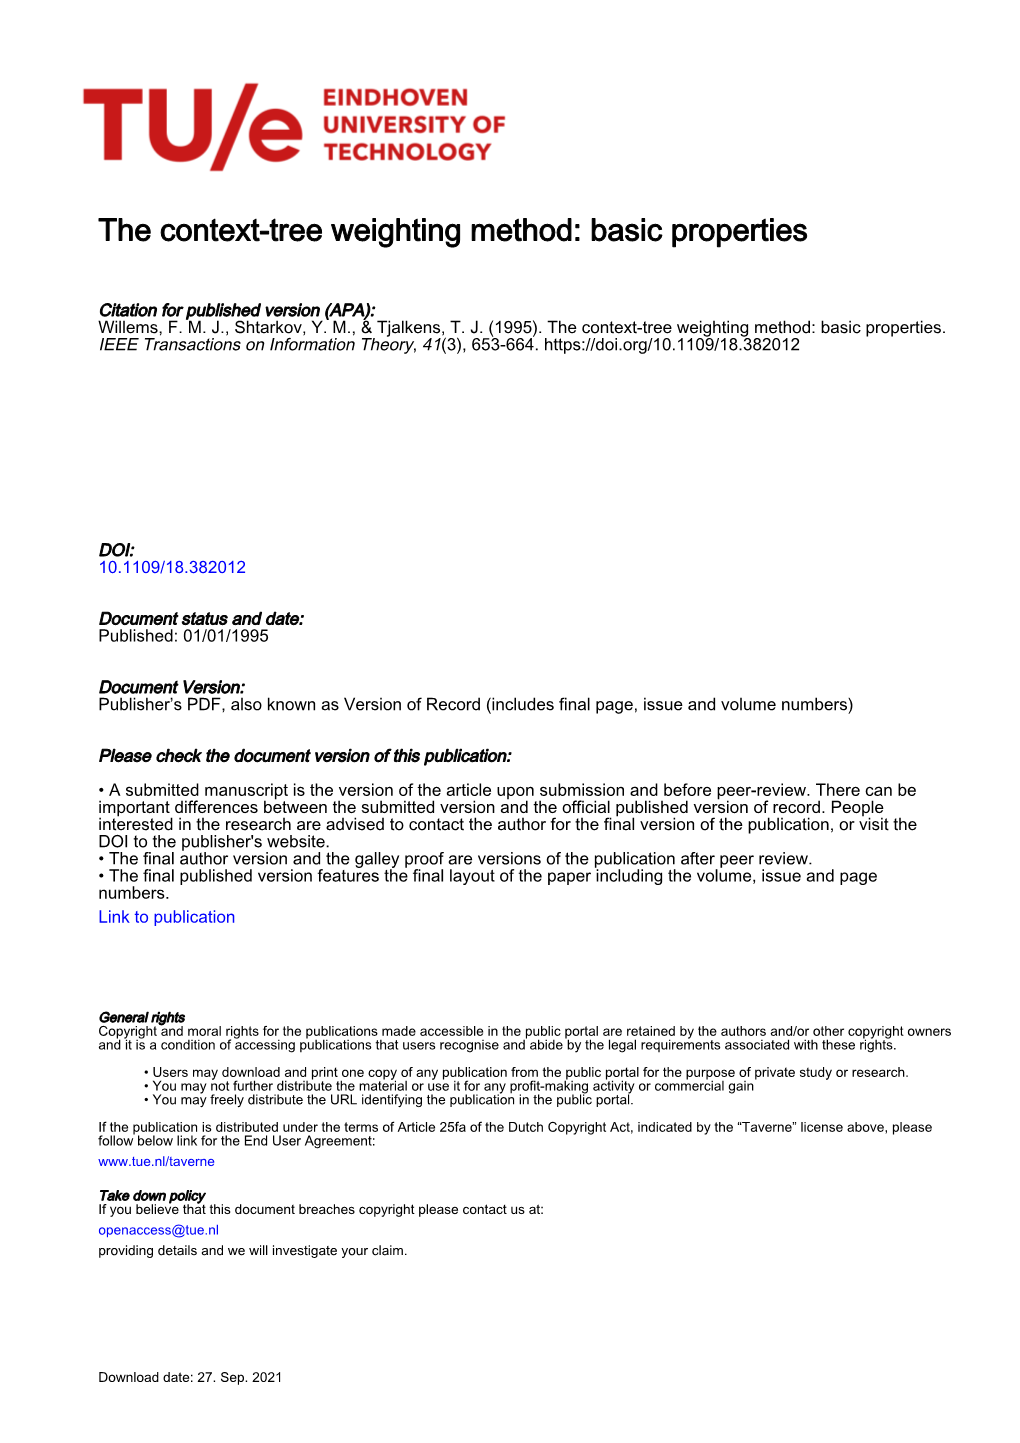 The Context-Tree Weighting Method: Basic Properties